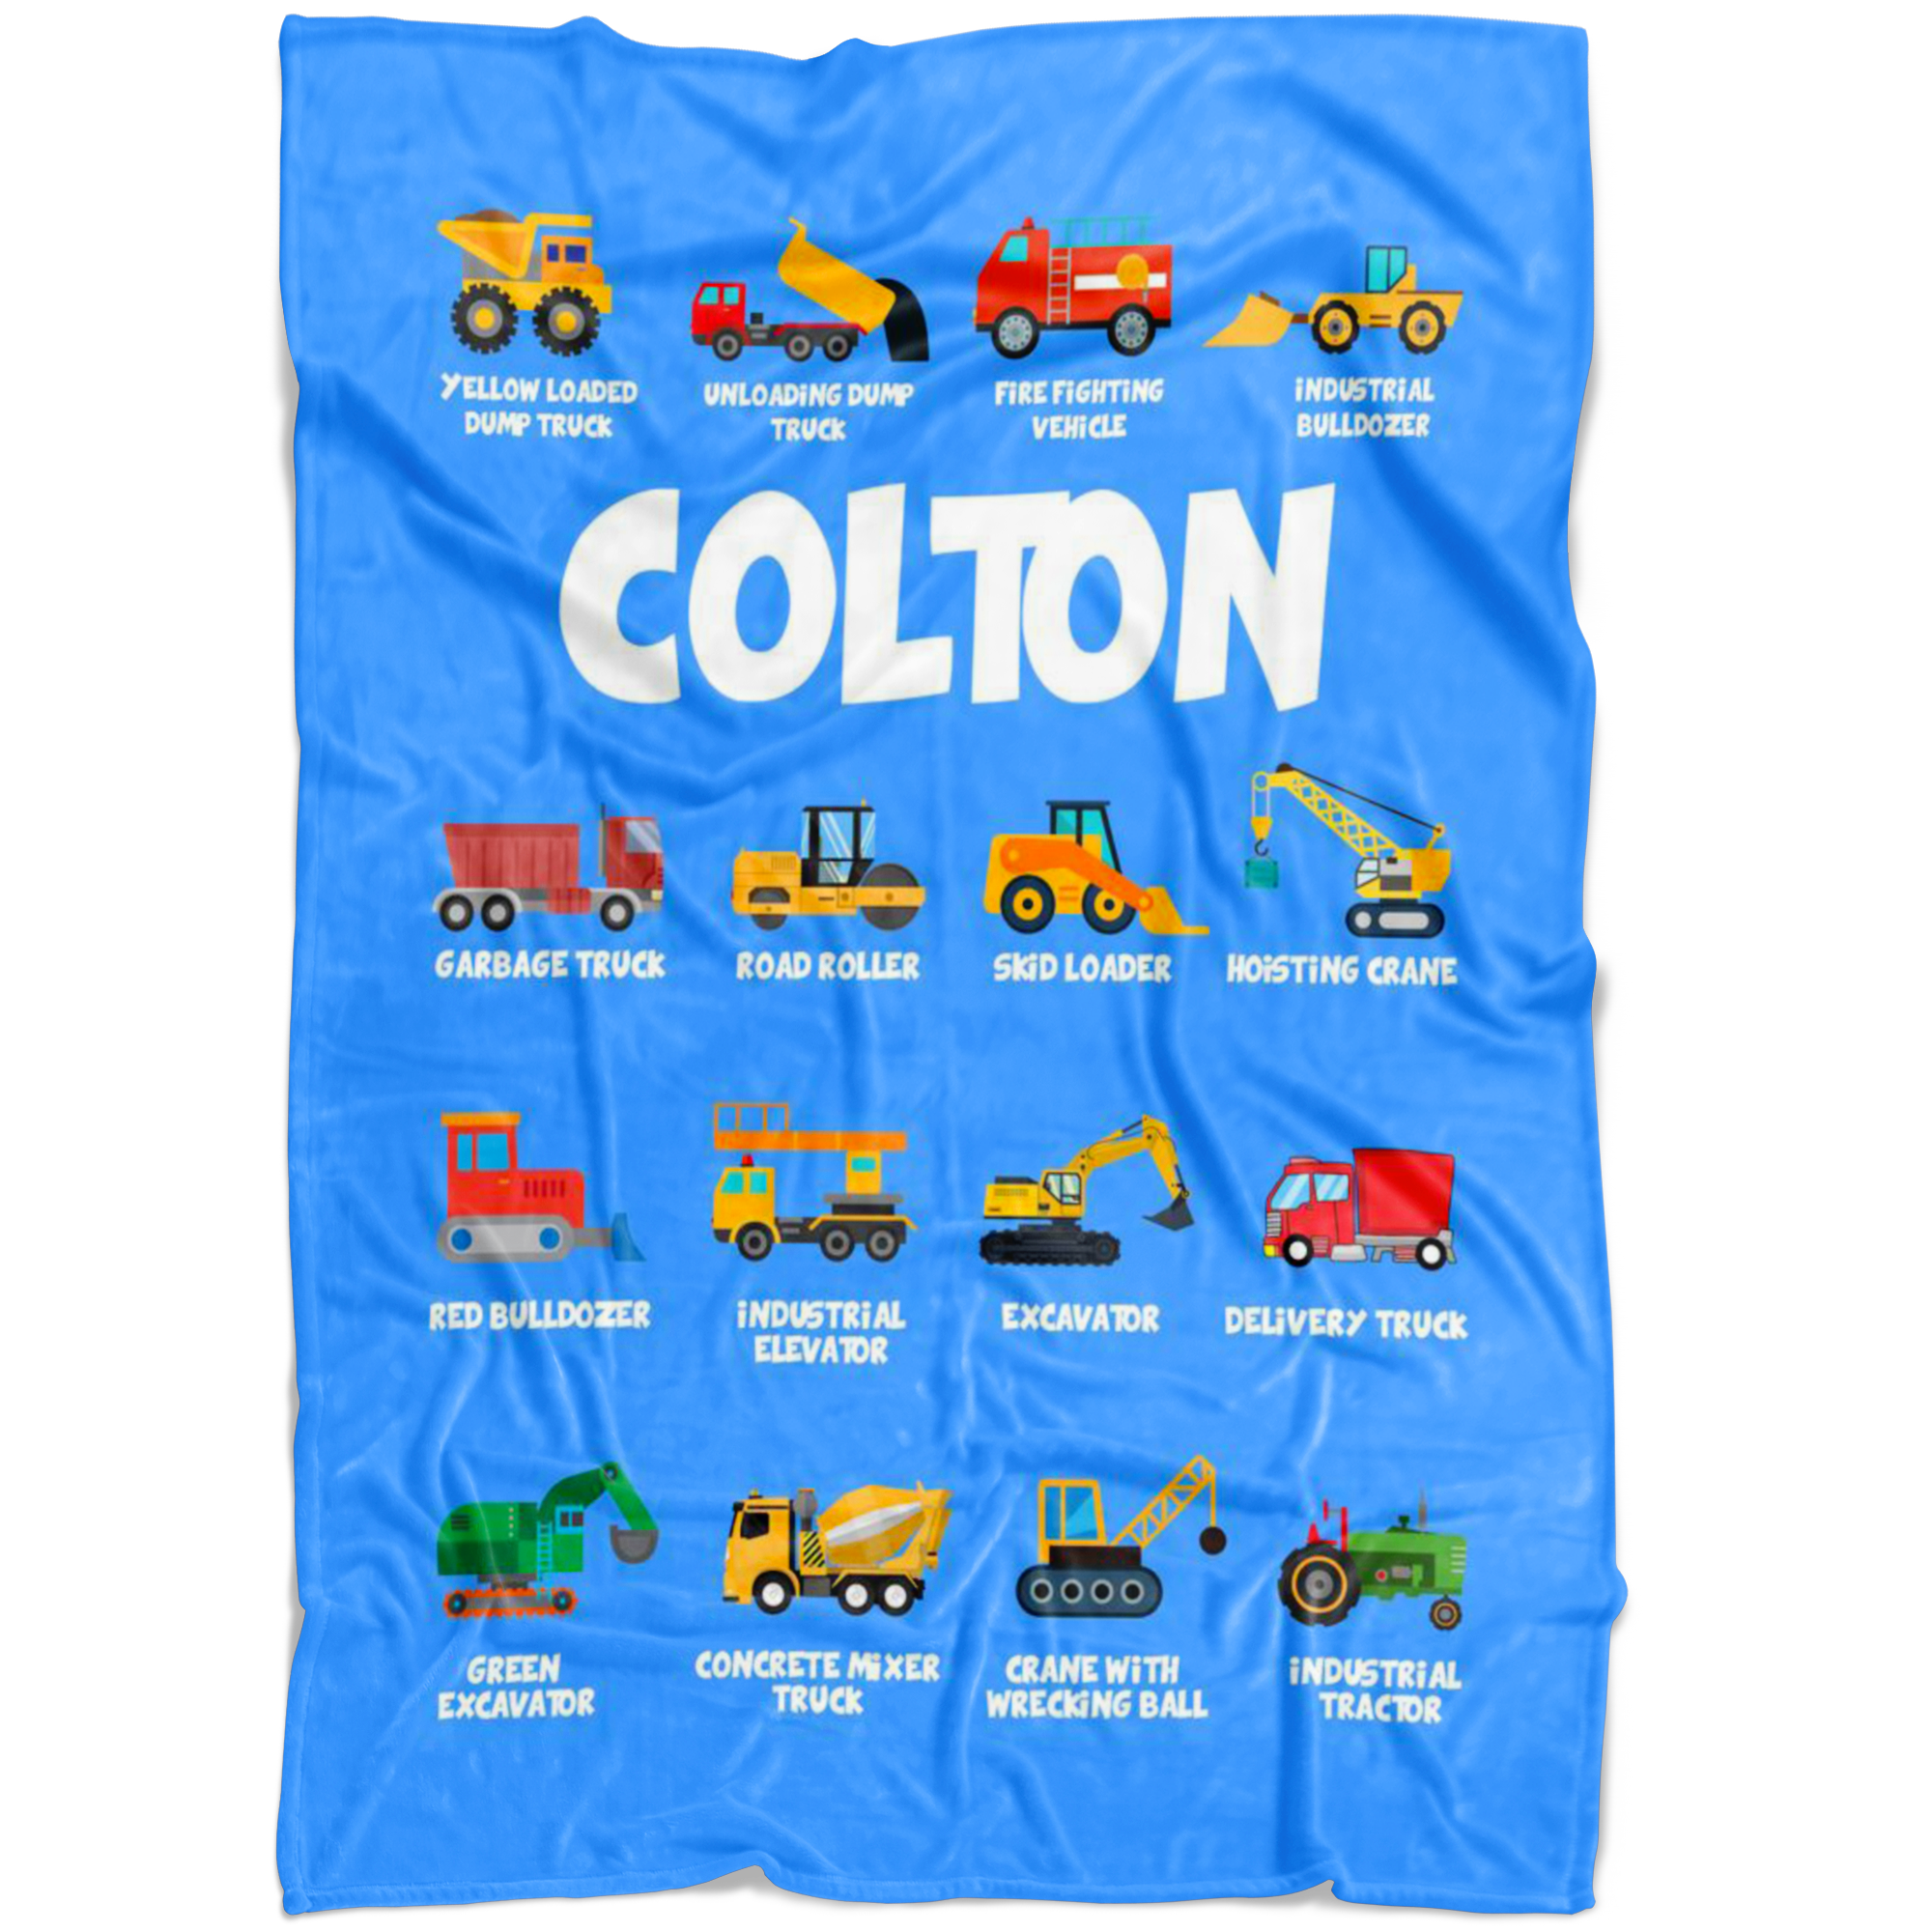 Colton Construction Blanket Blue